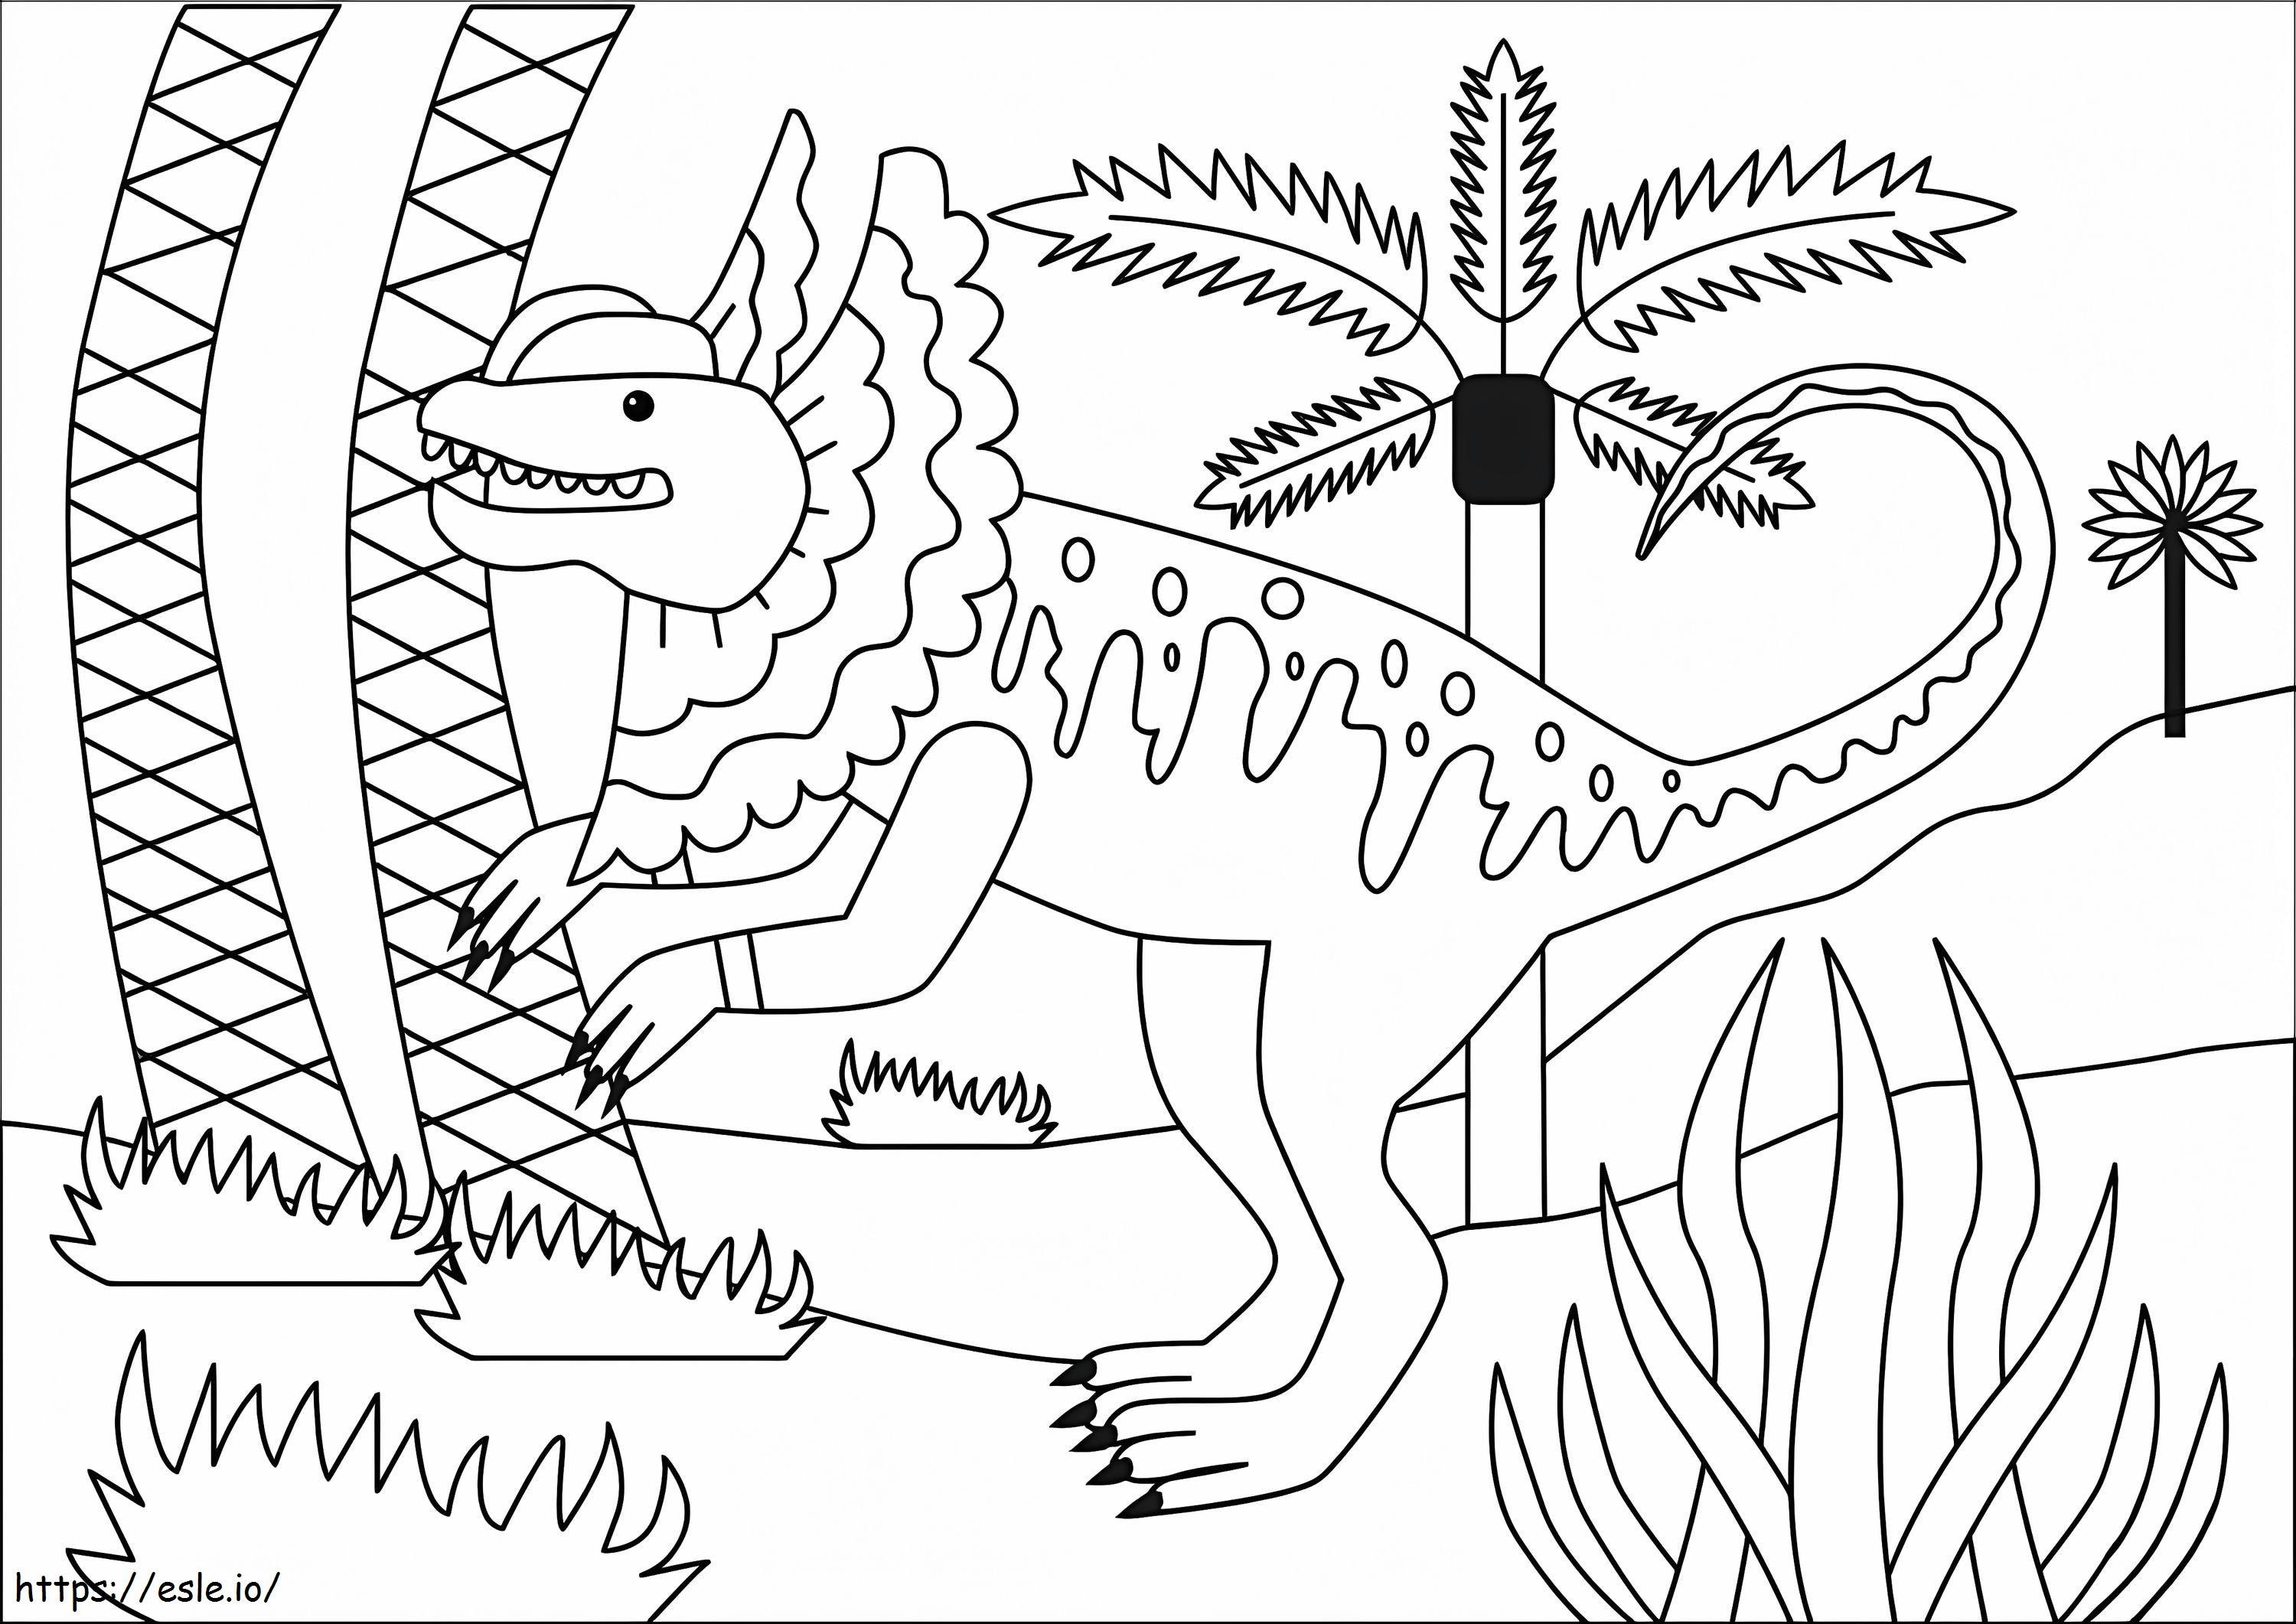 Simple Dilophosaurus coloring page